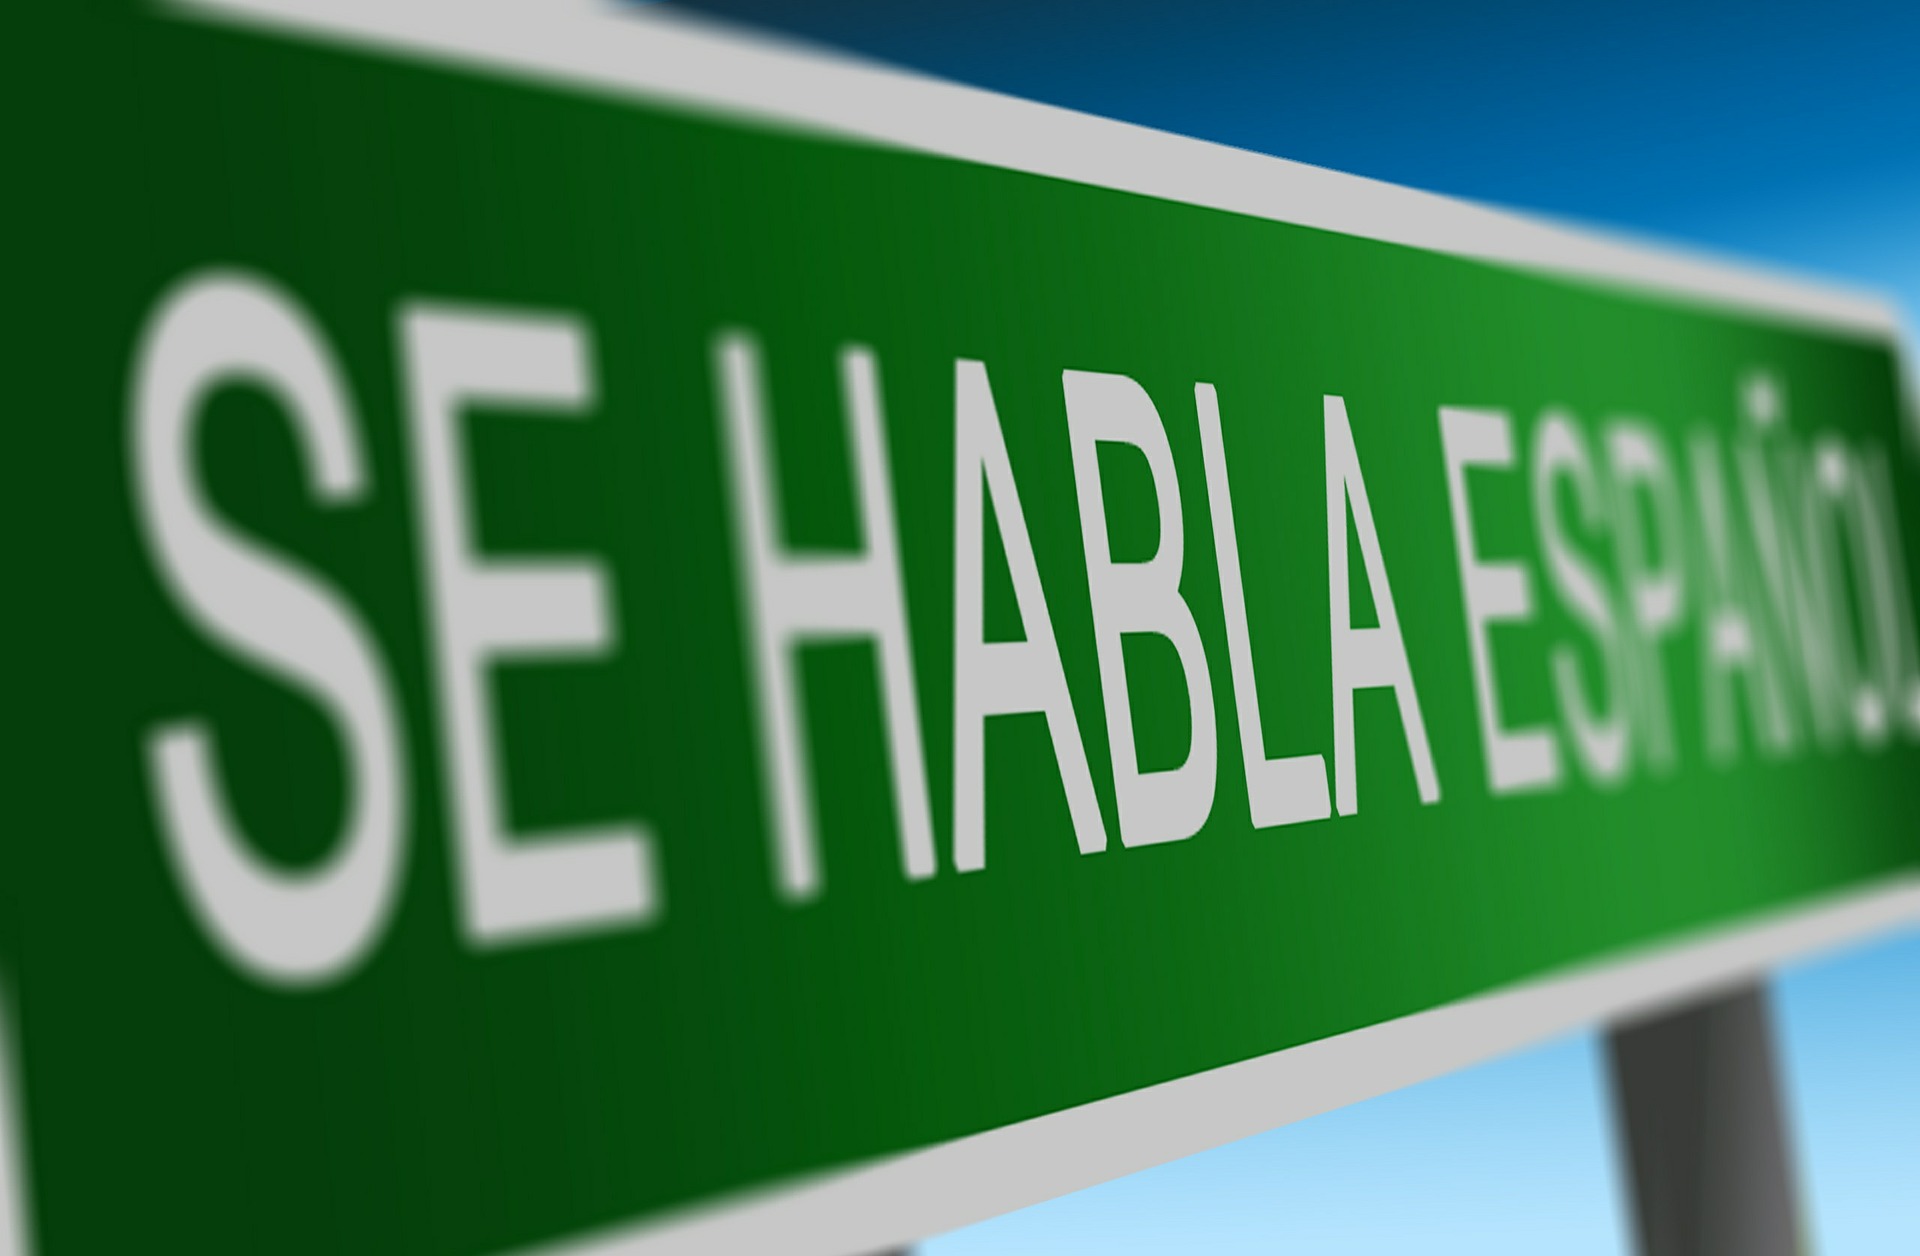 Bilingual employment websites: Spotlight on Spanish speakers